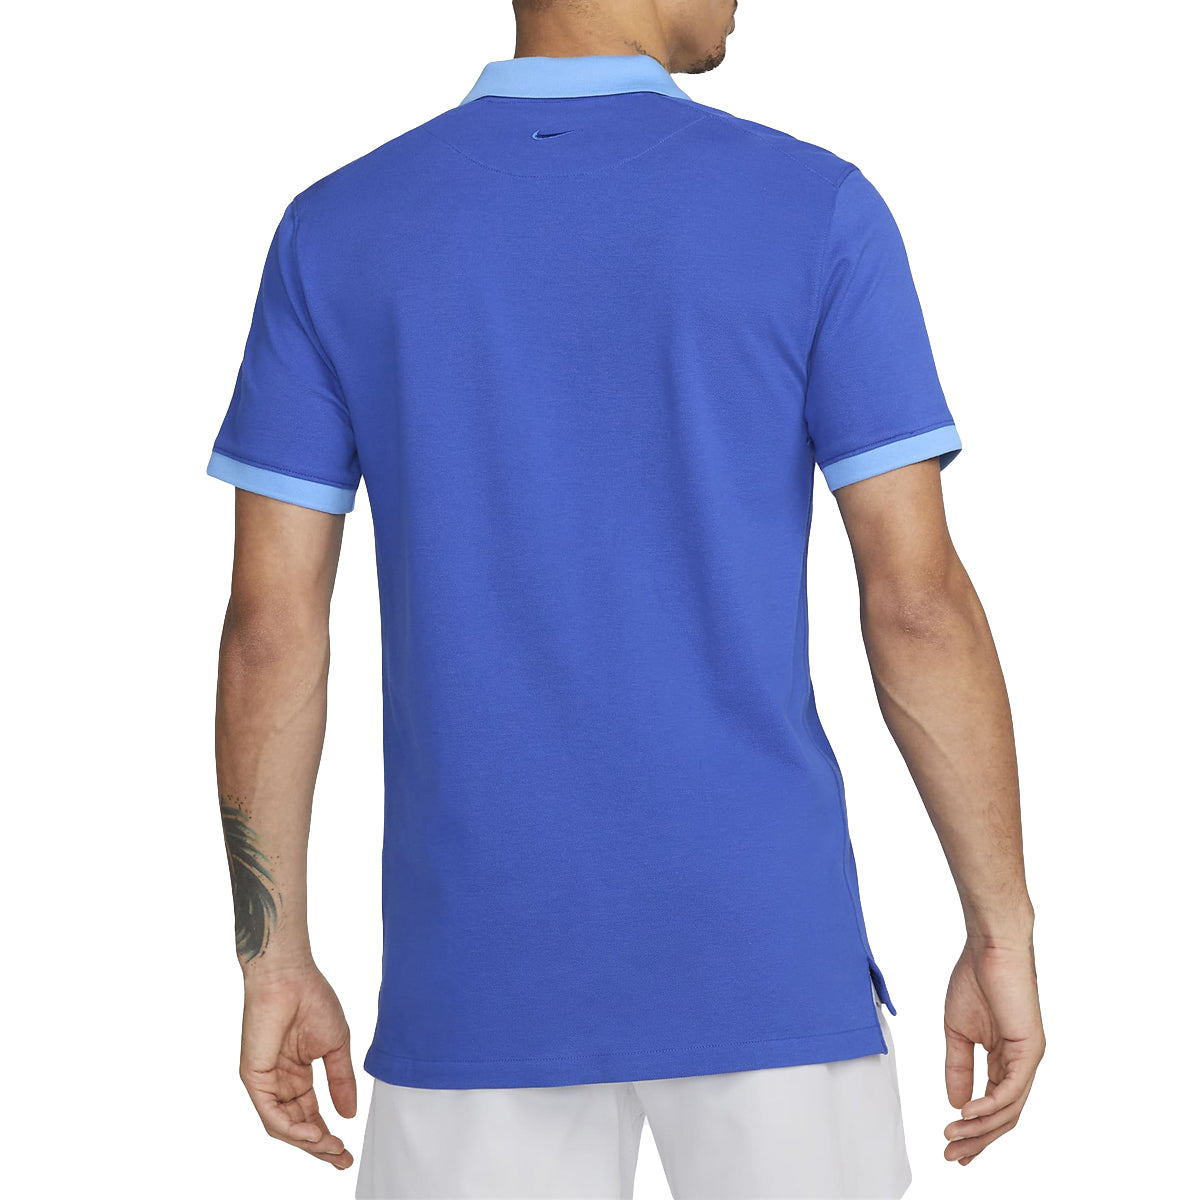 Polo Nike Slim-Fit Rafa (Homme) - Bleu électrique/Bleu université/Blanc